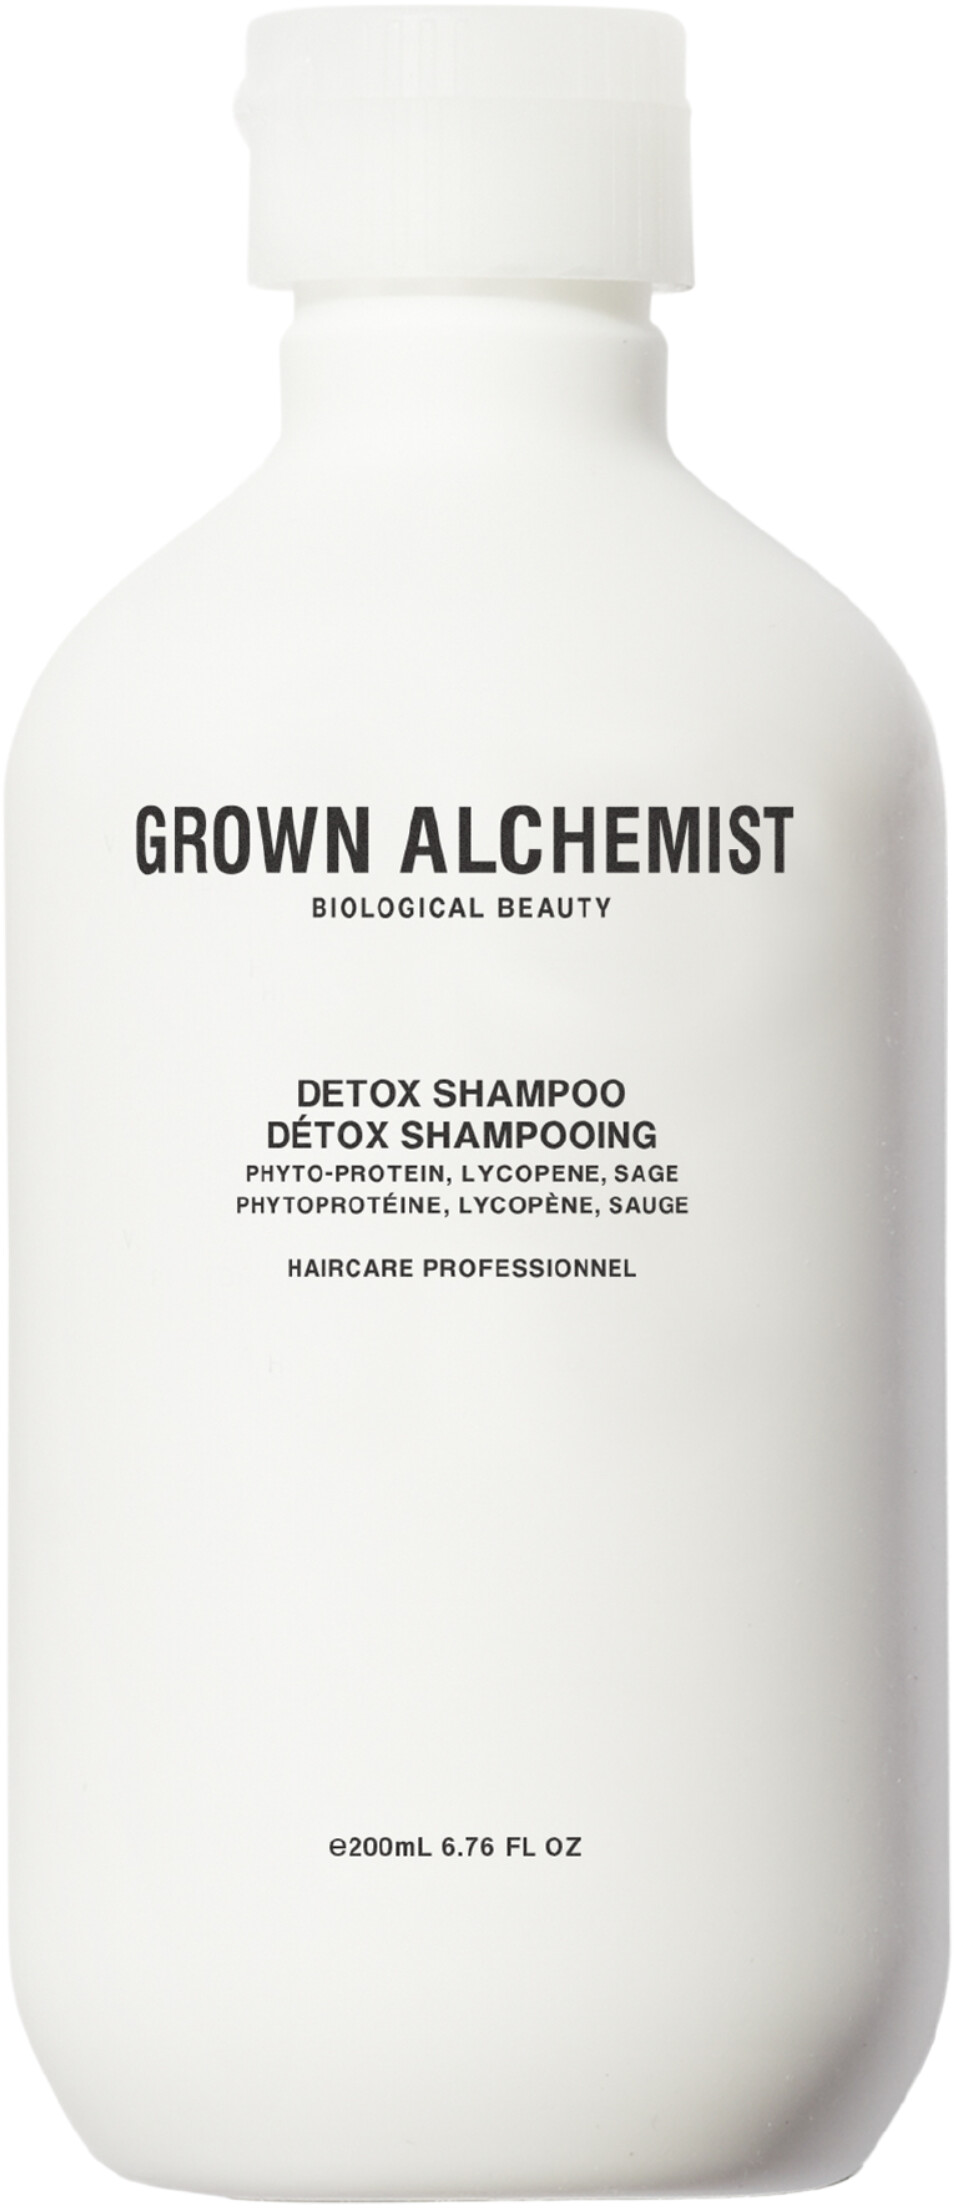 Grown Alchemist Detox Shampoo - Phyto-Protein, Lycopene & Sage 200ml